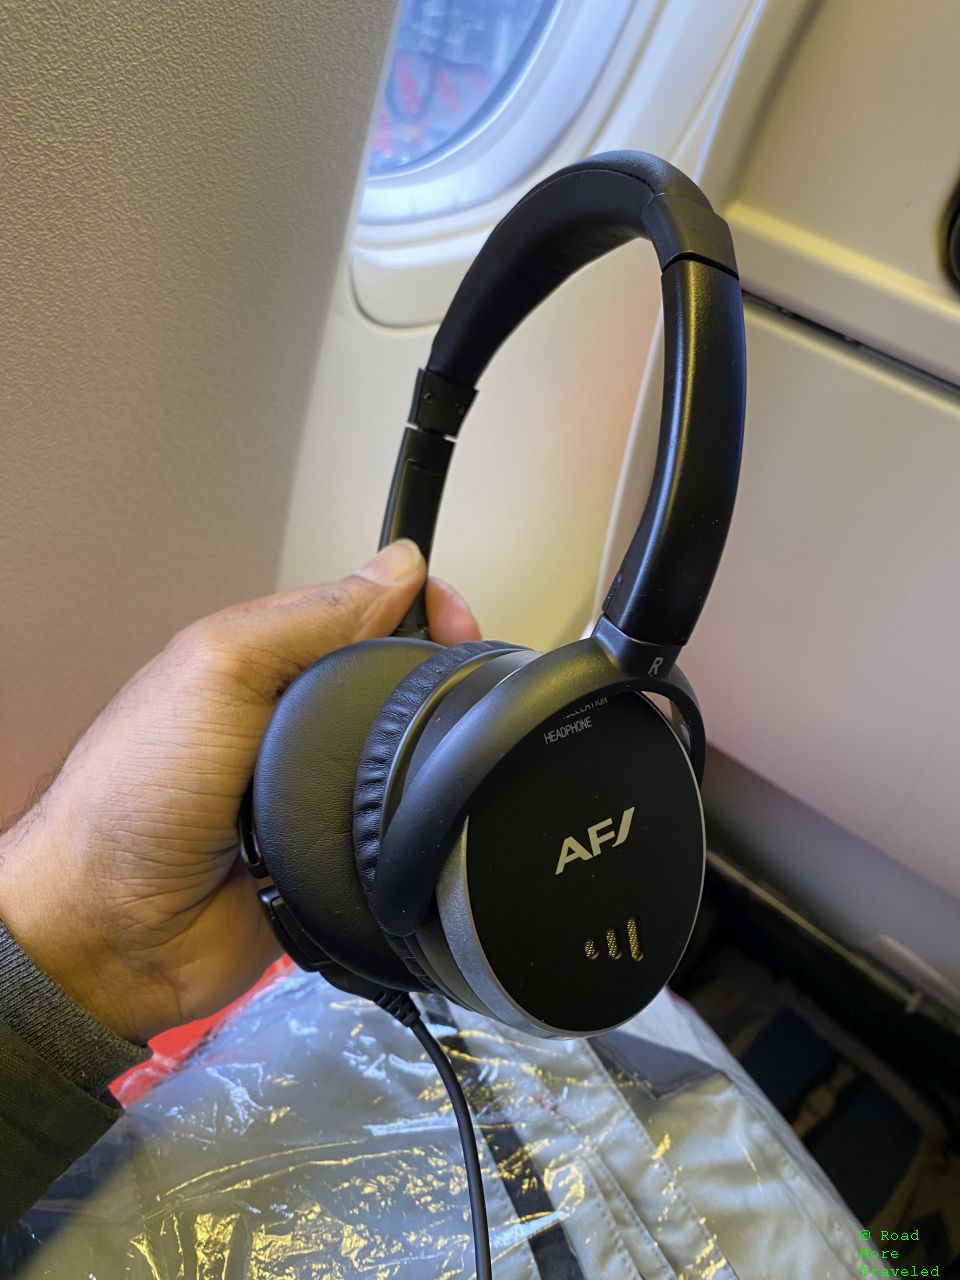 Air France Premium Economy headphones